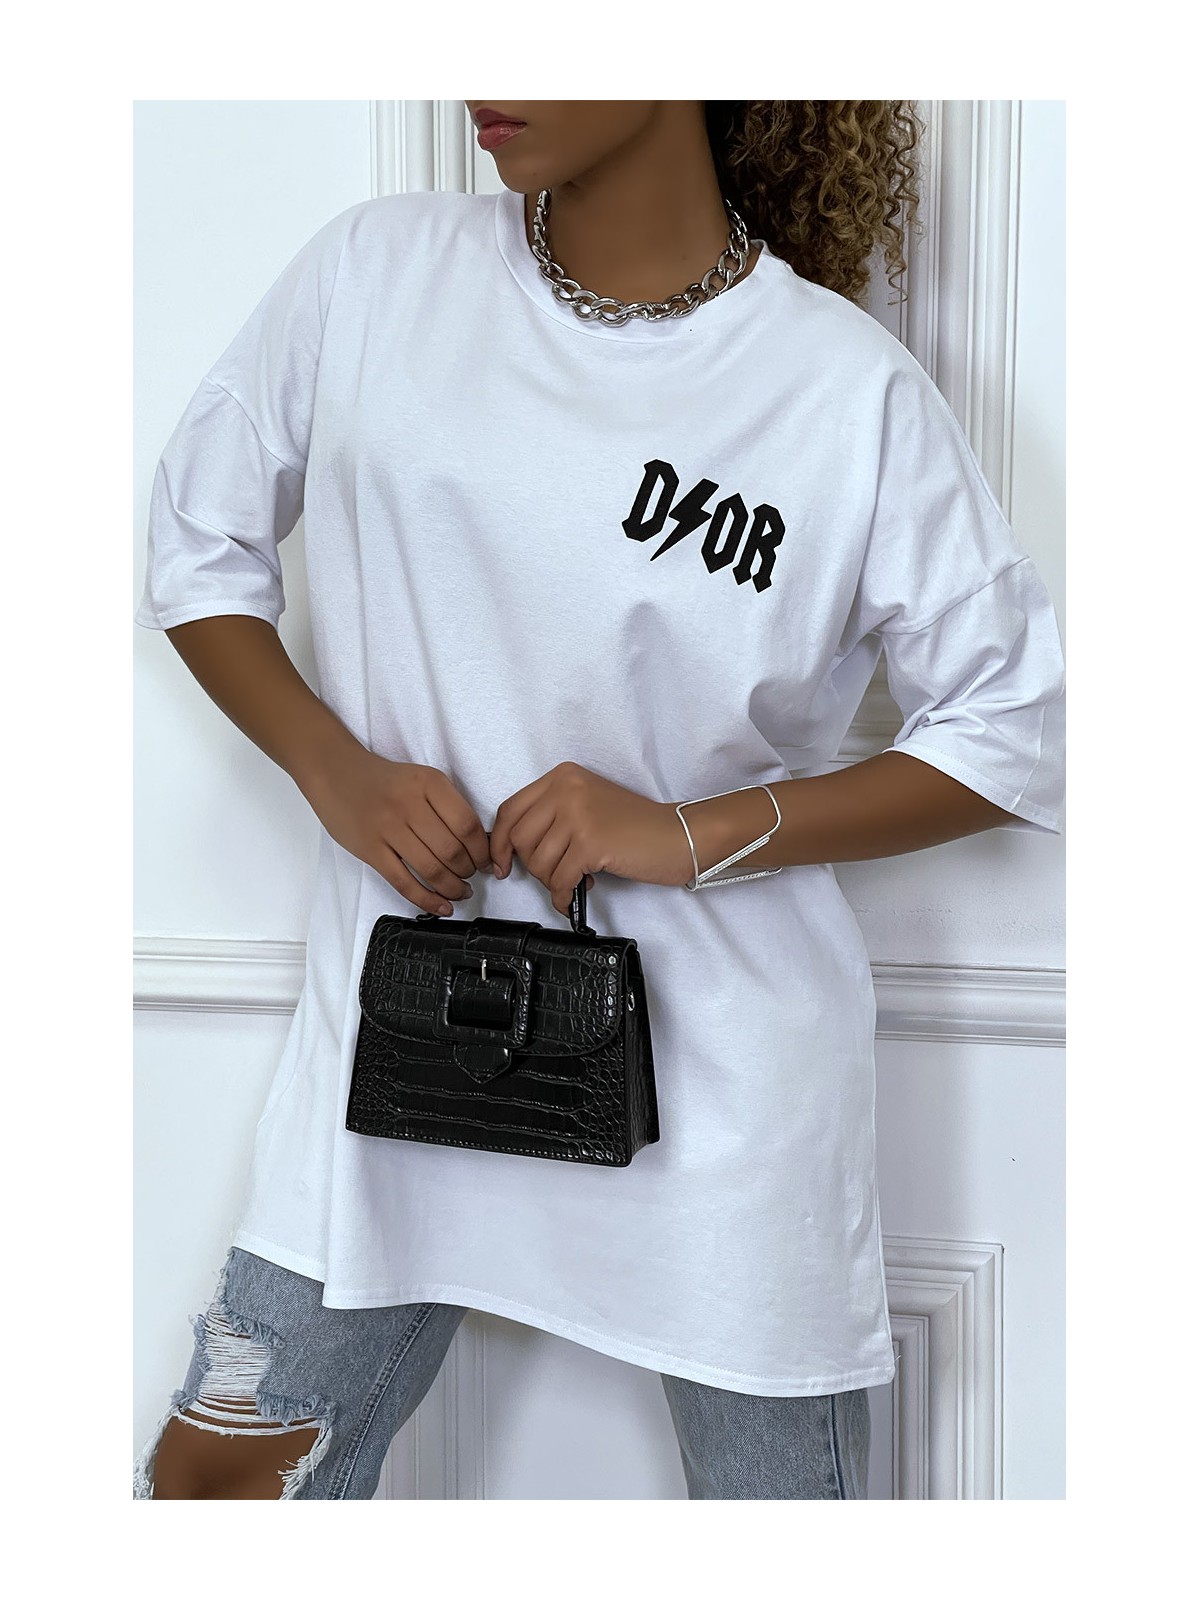 Tee-shirt oversize blanc tendance, écriture "D/or", manche mi-longue - 5